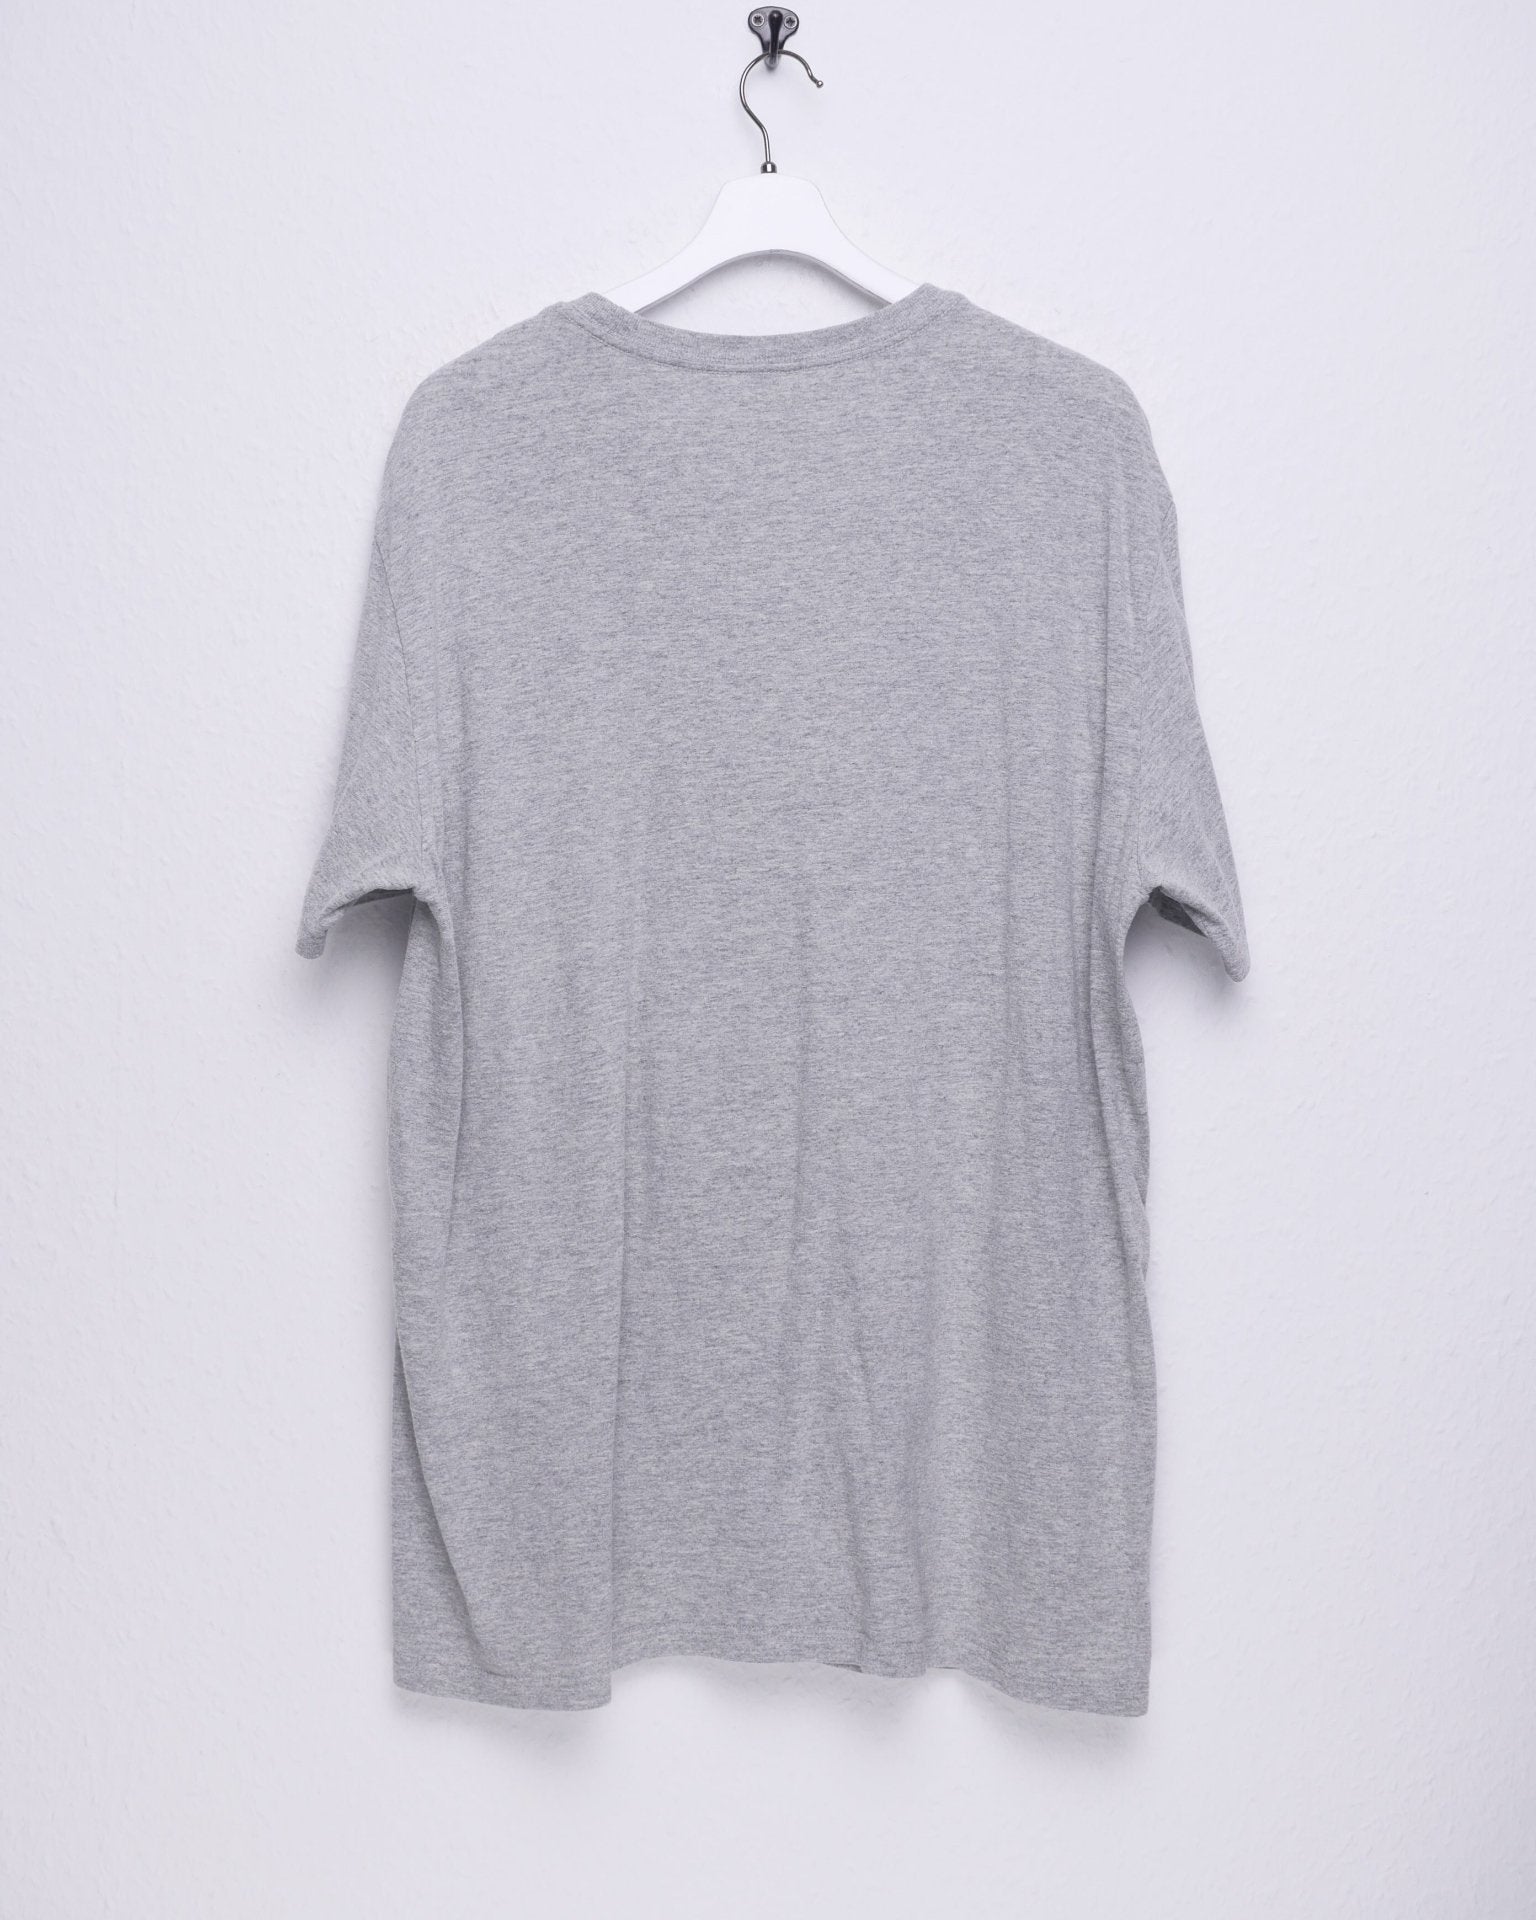 nautica printed Graphic grey Shirt - Peeces